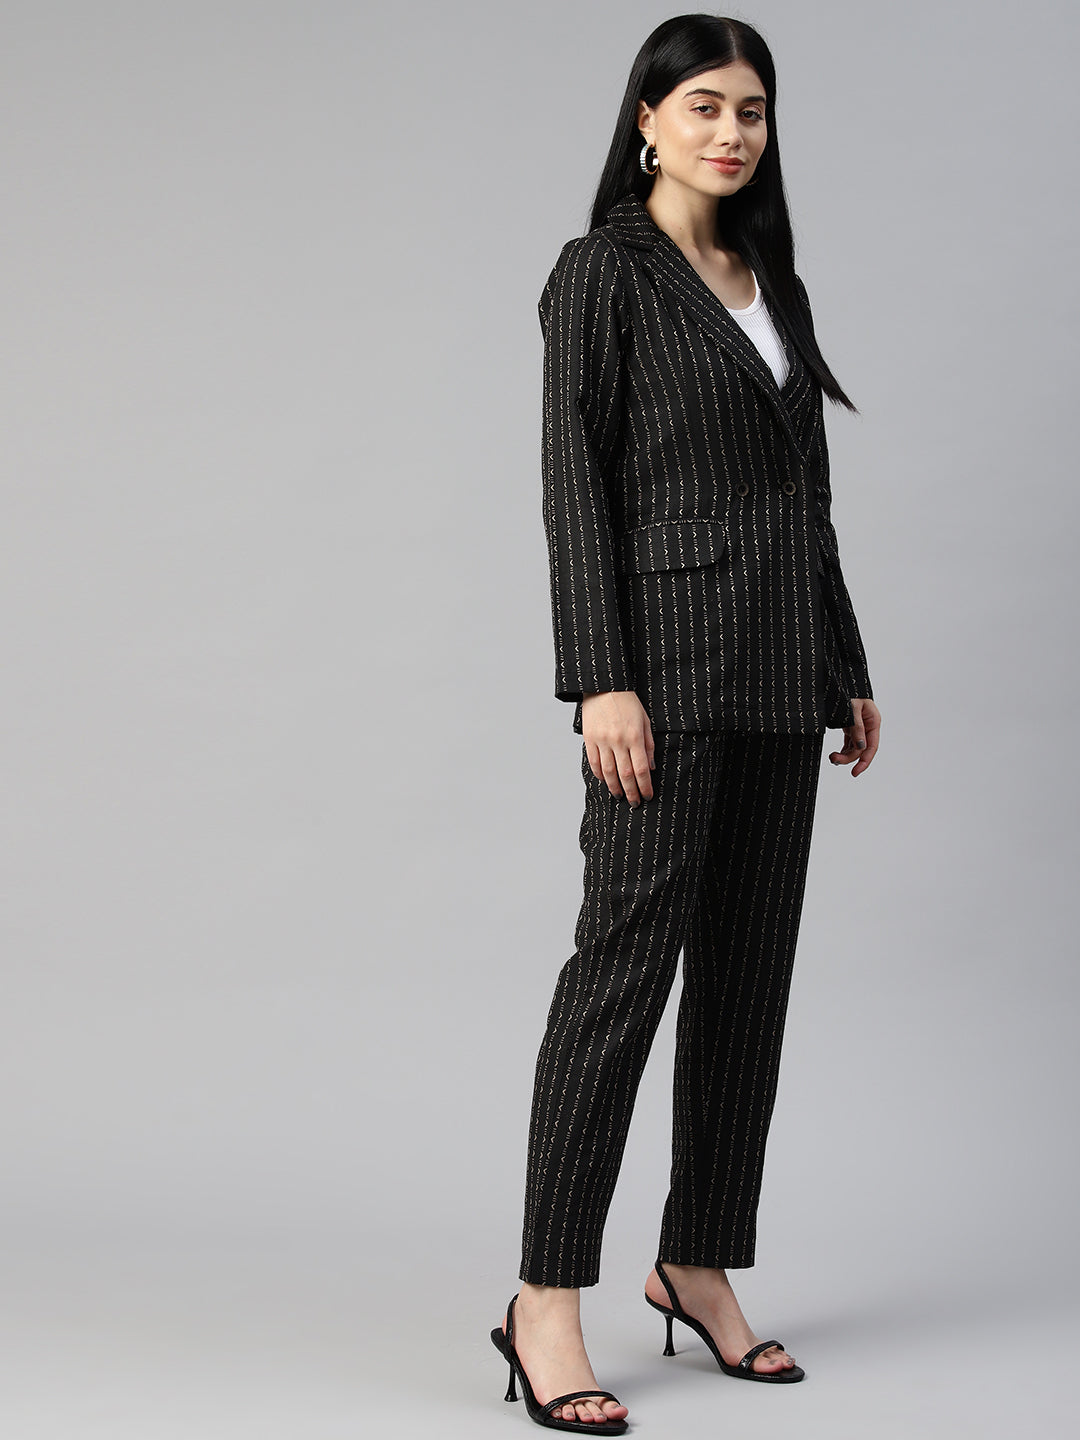 Blue Striped Office Suit Women Blazer With Trouser Business elegant 2 Piece  Set | eBay